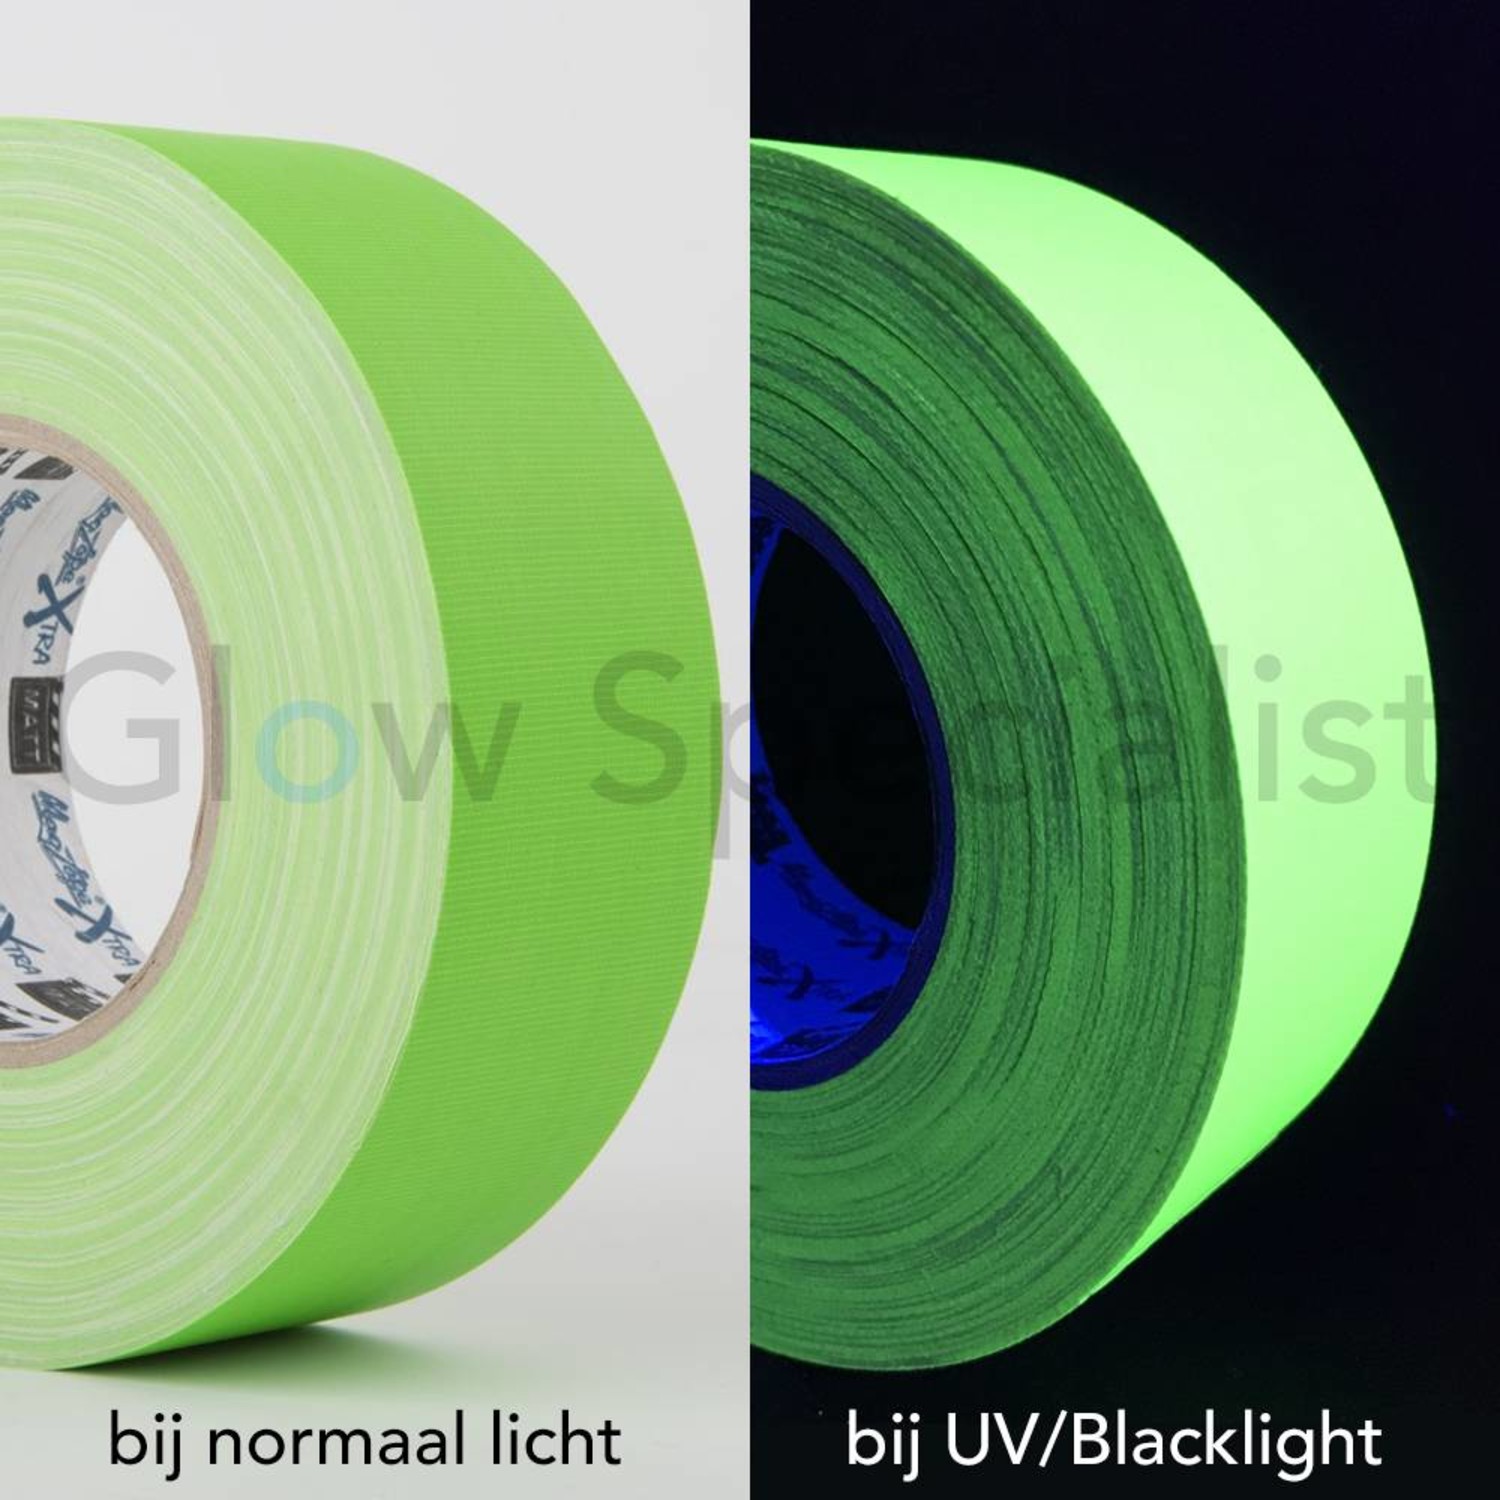 Ruban néon uV-active tape ruban adhésif 50 mm x 25 m (vert)